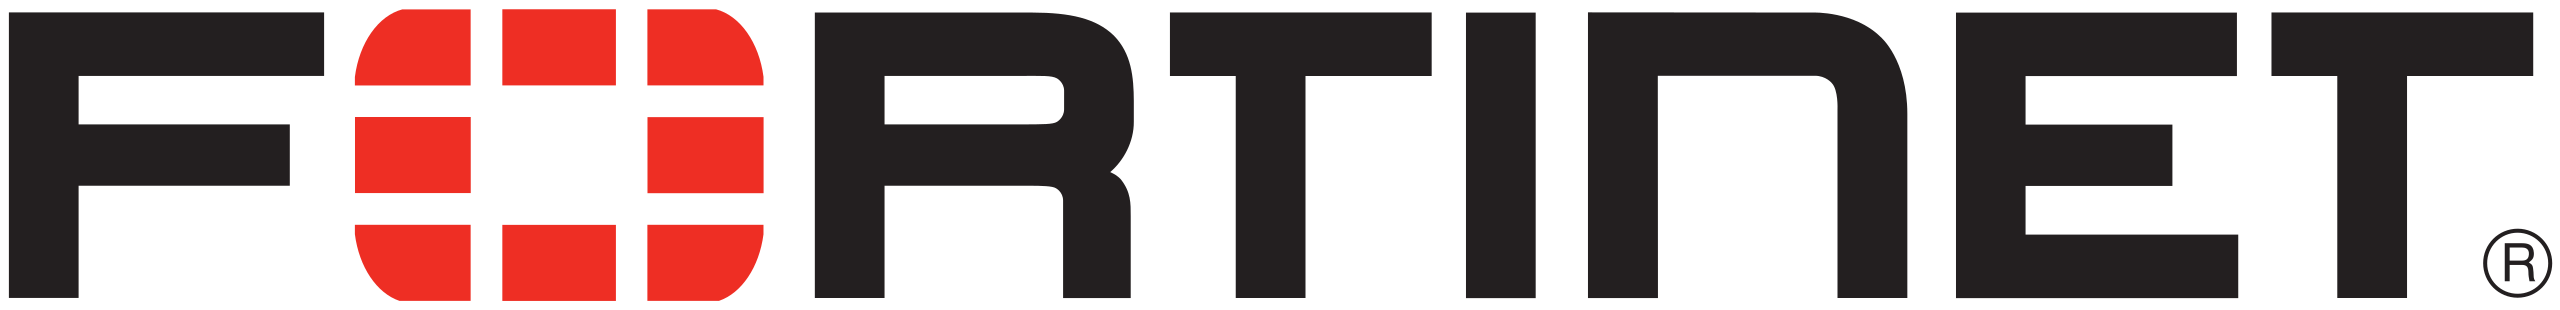 logo-FORTINET